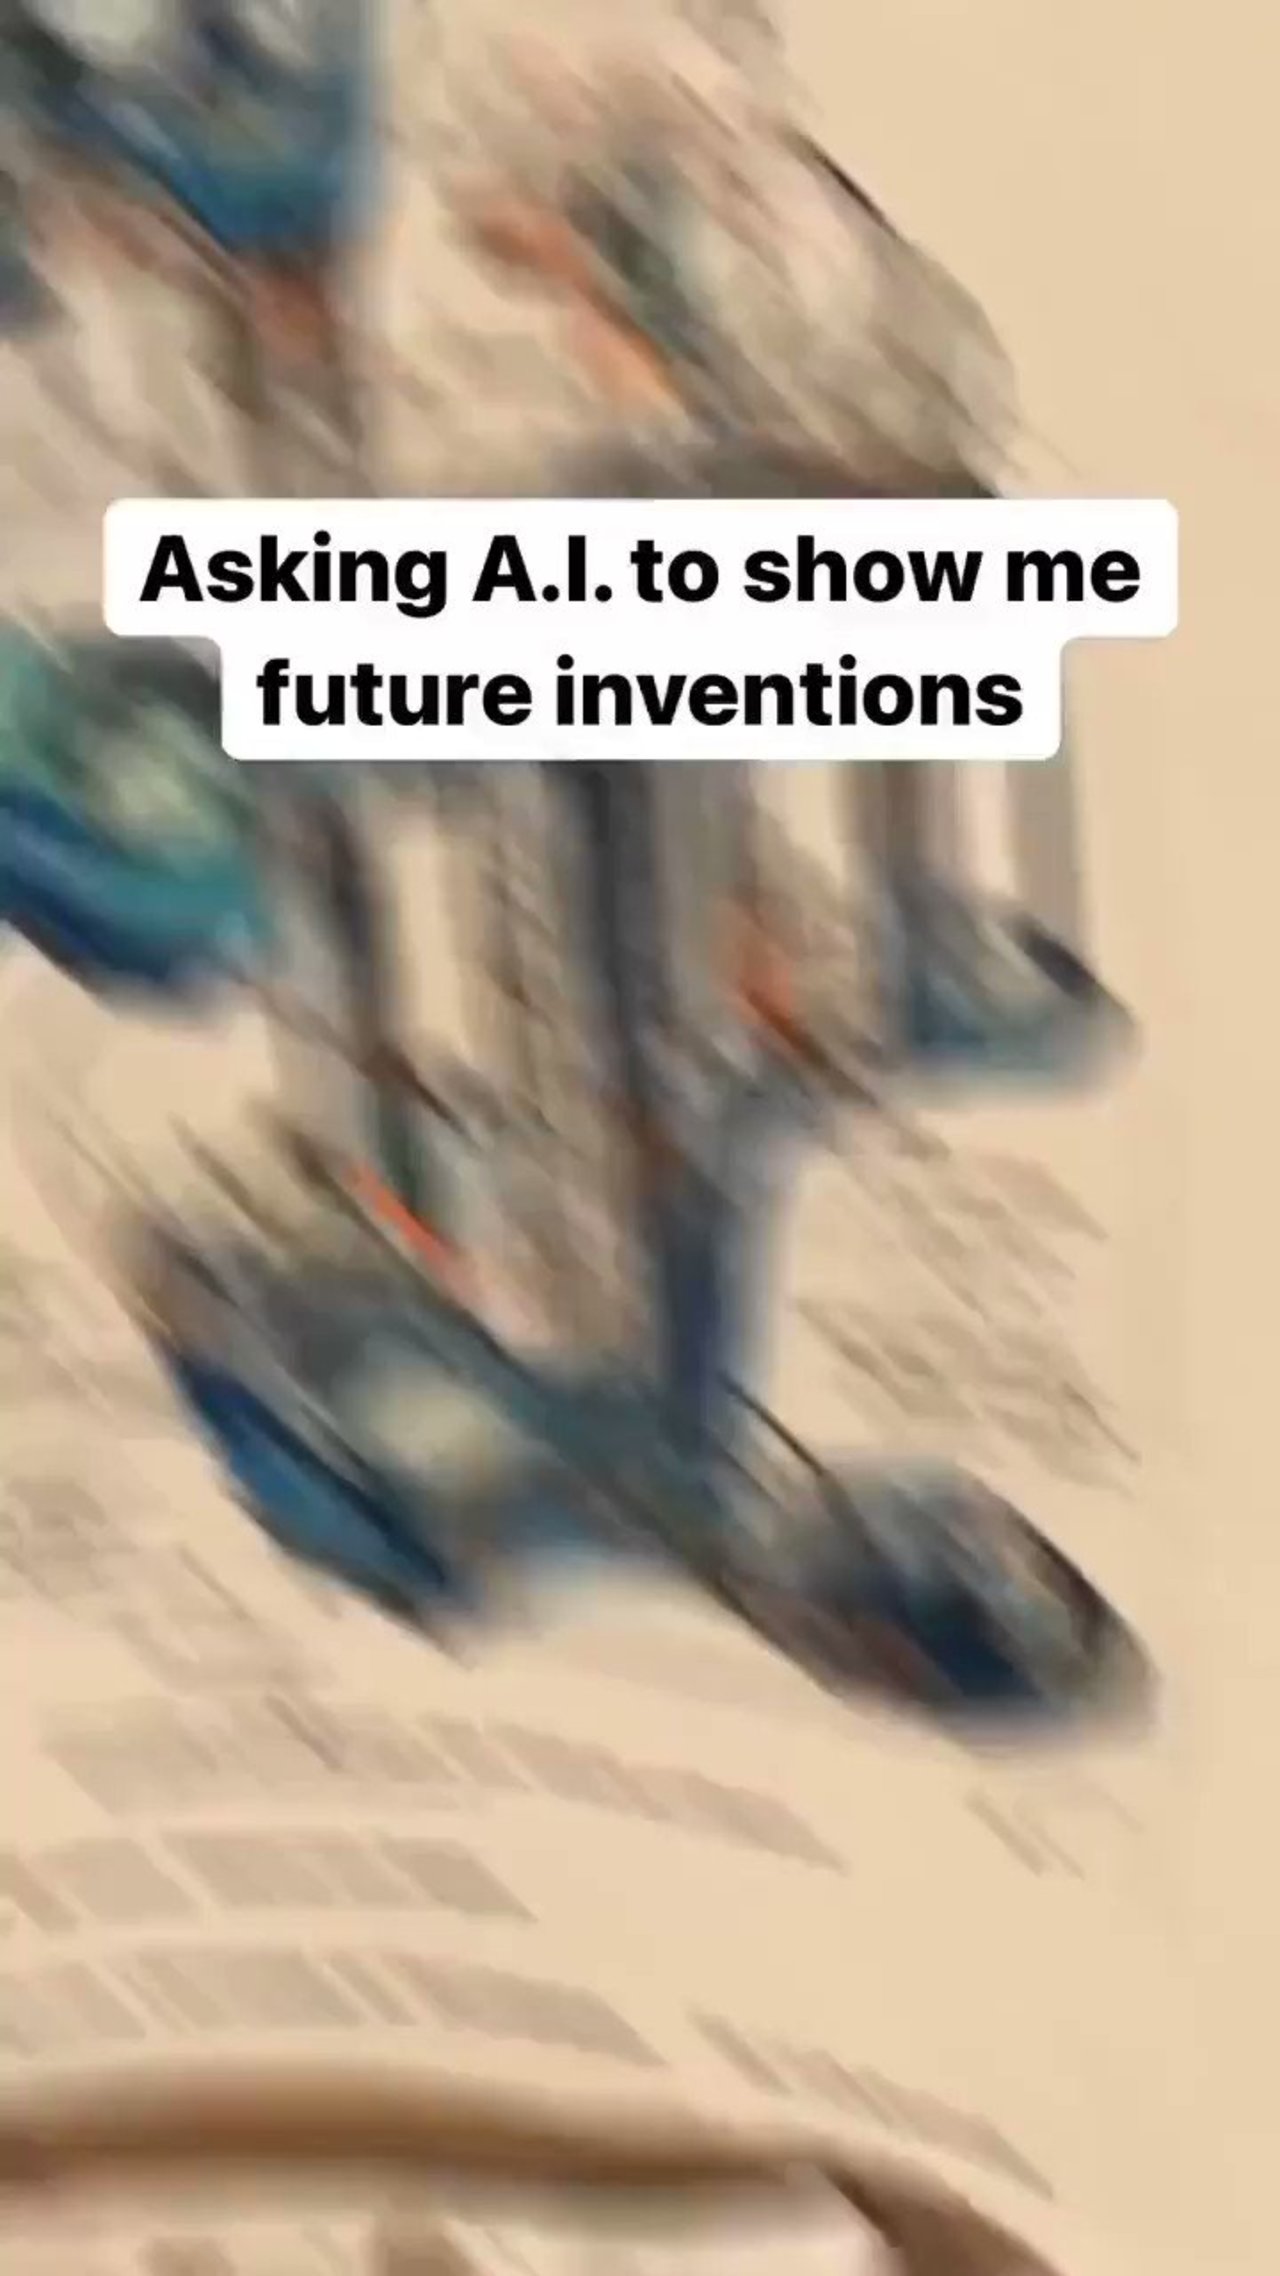 Asking #AI to show the future invention via @TheAdityaPatro #MachineLearning #ArtificialIntelligence #ML #MI #DL #Innovation cc: @ronald_vanloon @yvesmulkers @pbalakrishnarao @levie https://t.co/2Zl2EF06C2